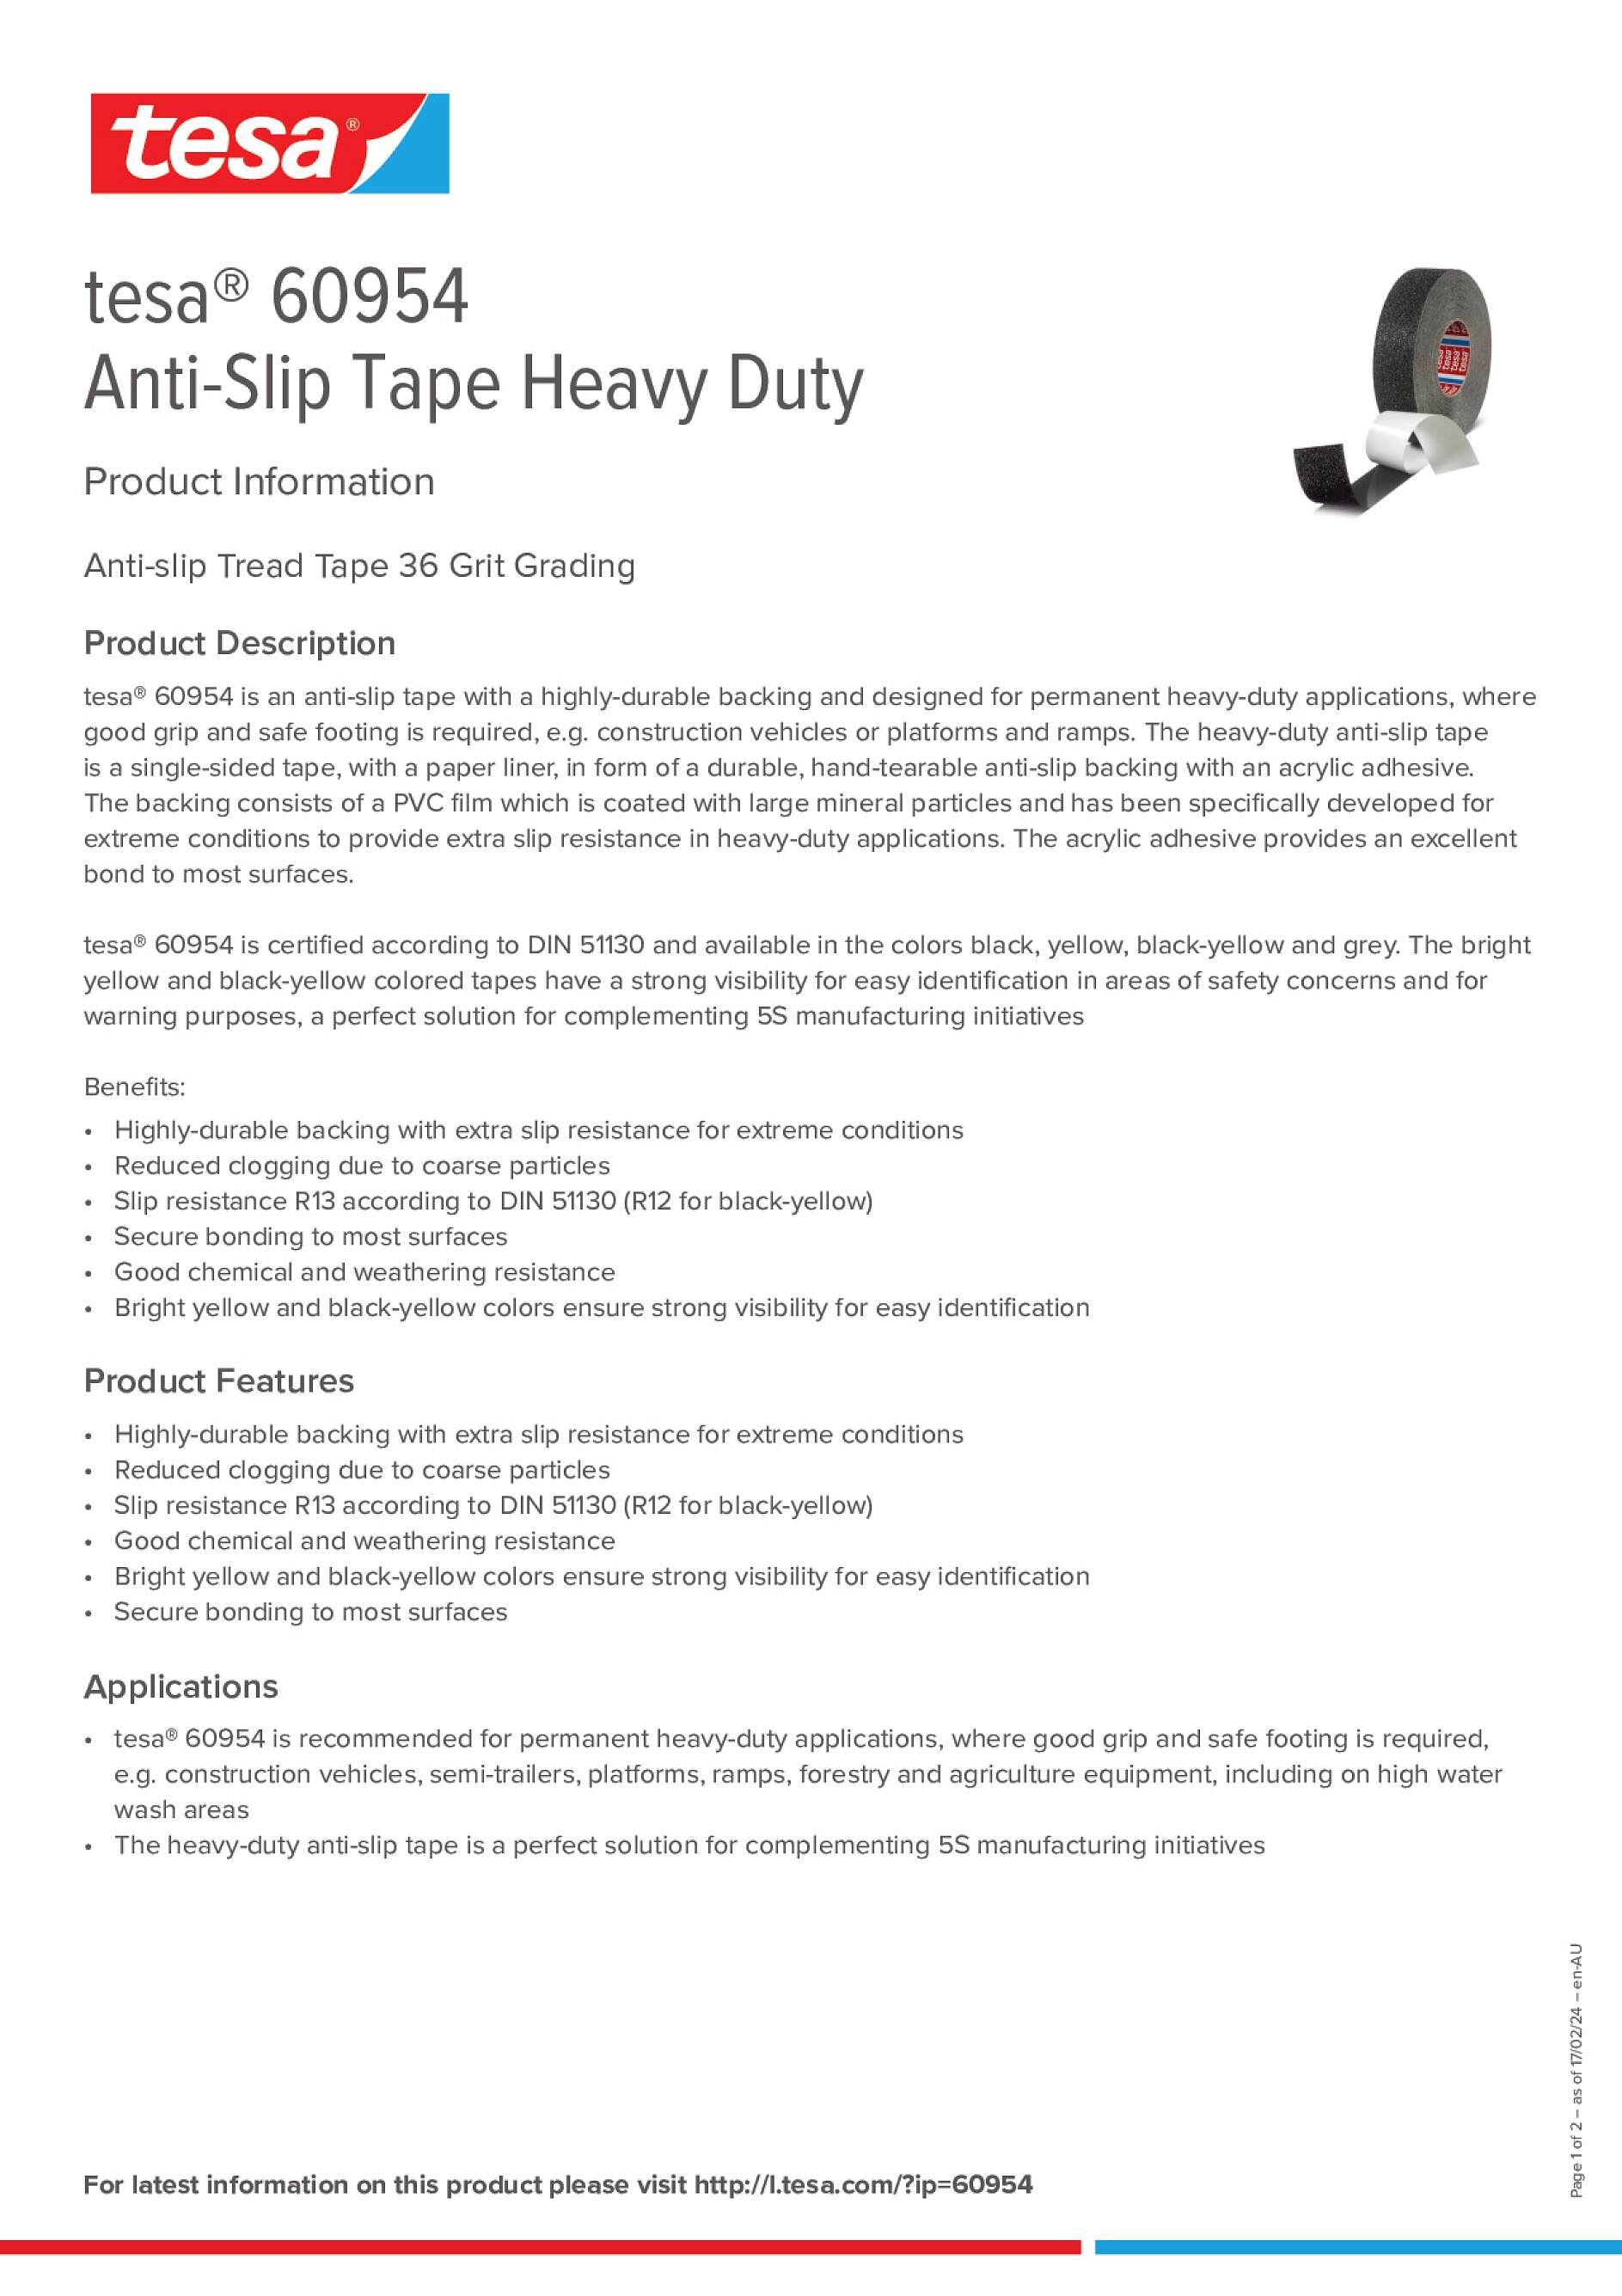 tesa 60954 Anti-Slip Tape Heavy Duty - tesa